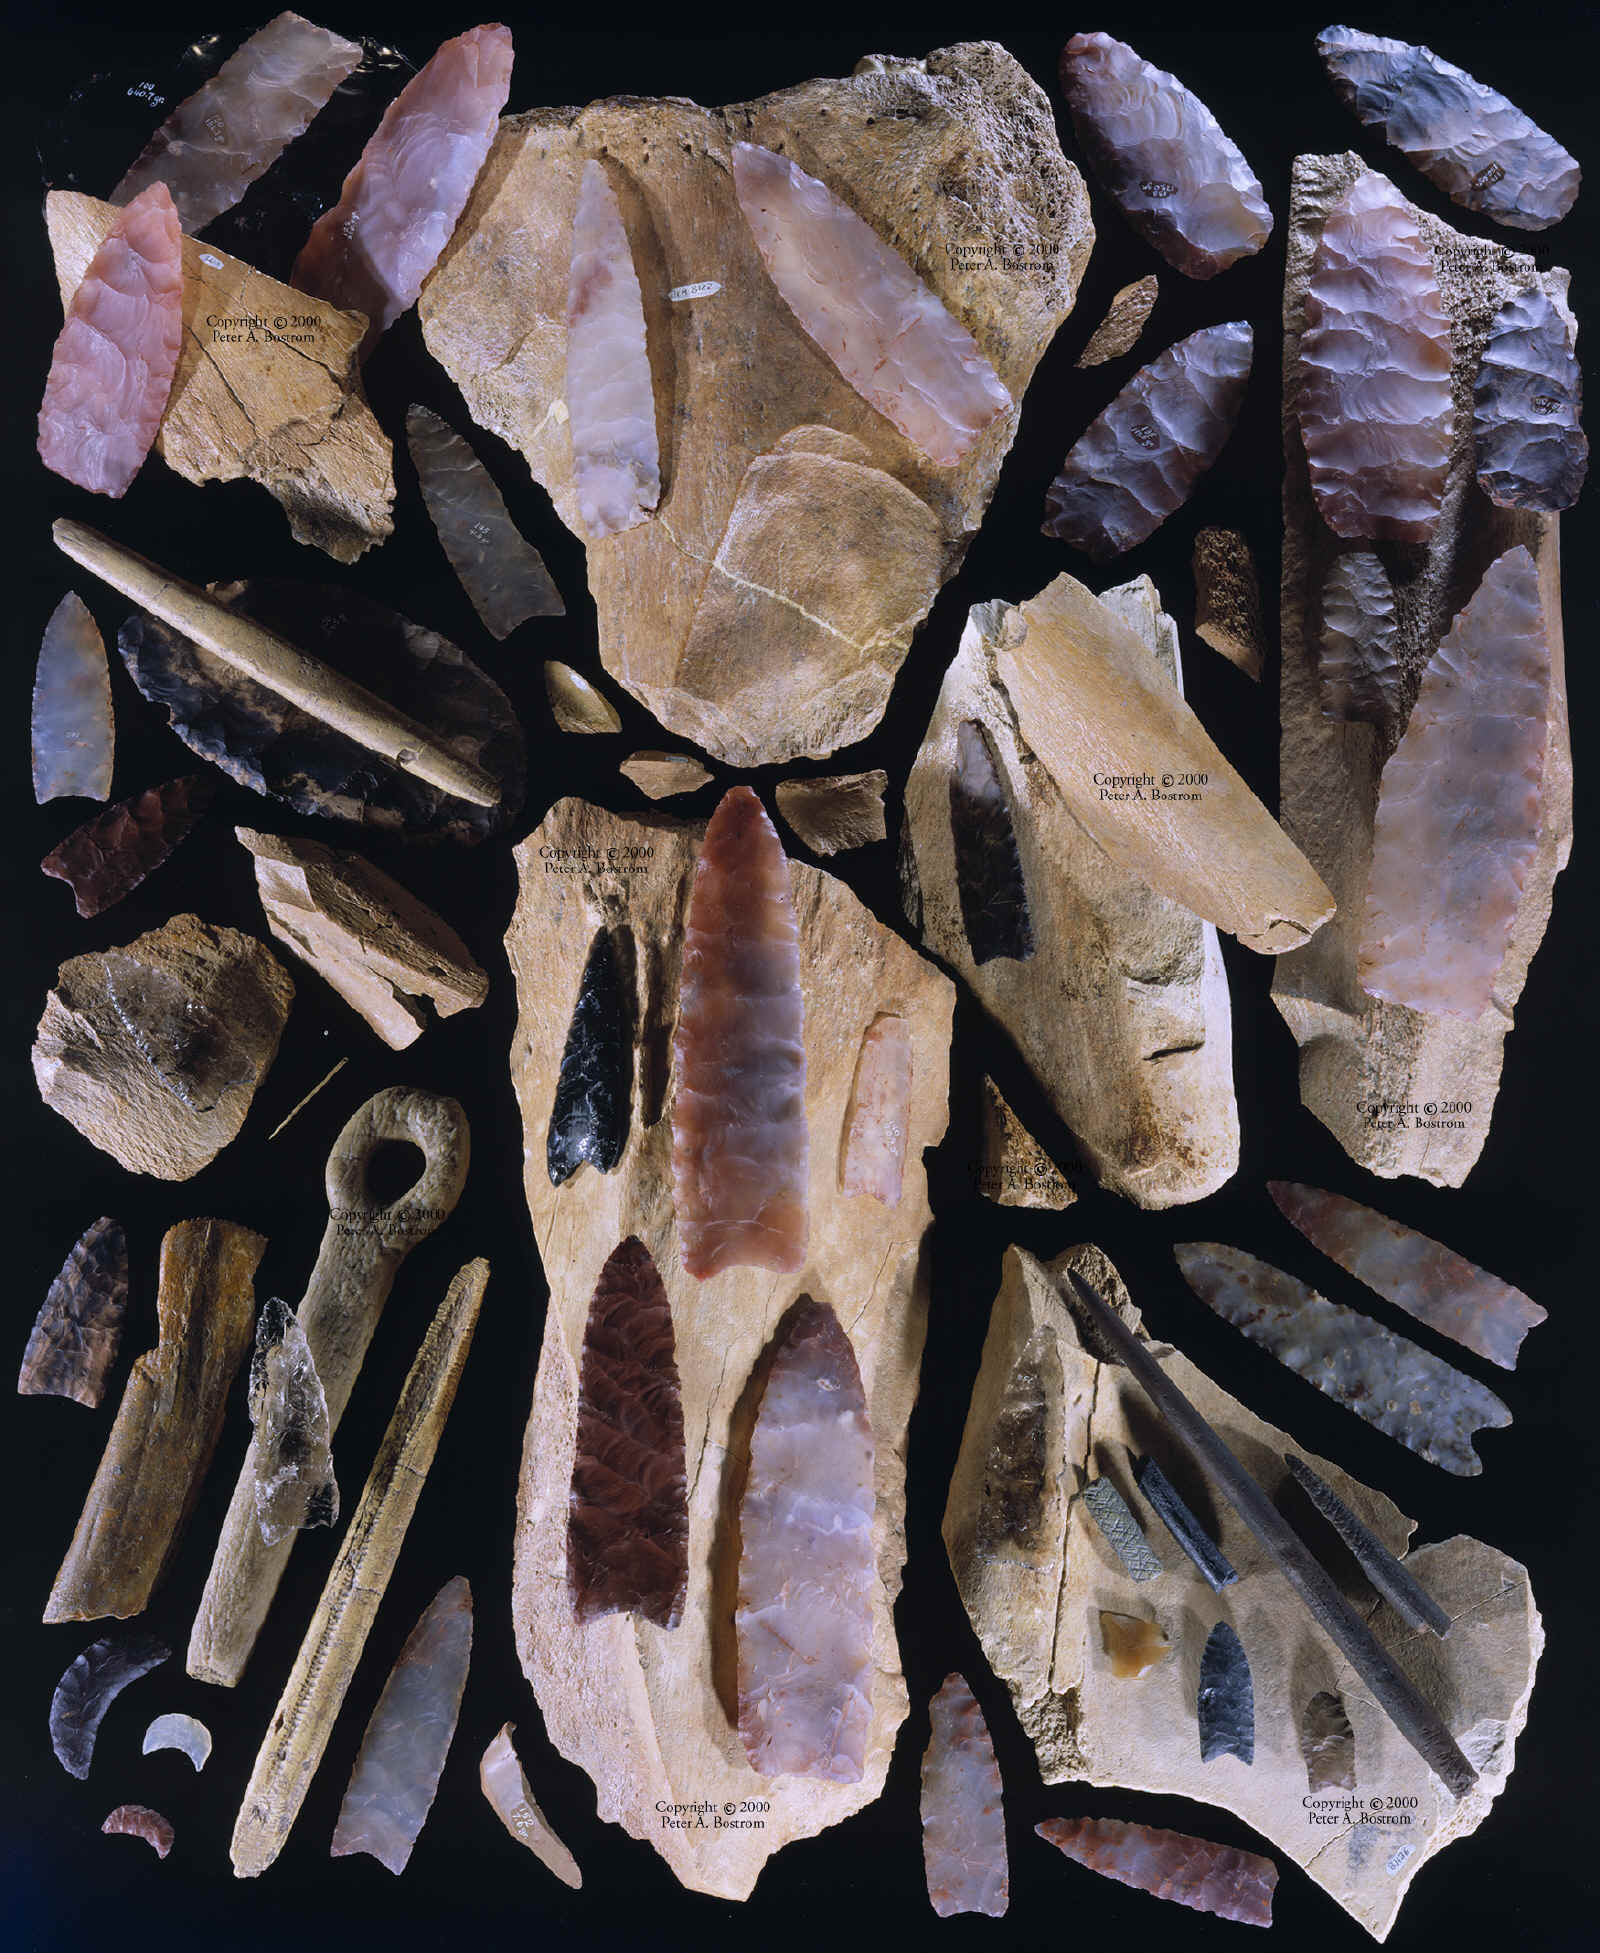 Many Clovis artifacts from Fenn cache and Lange ferguson.